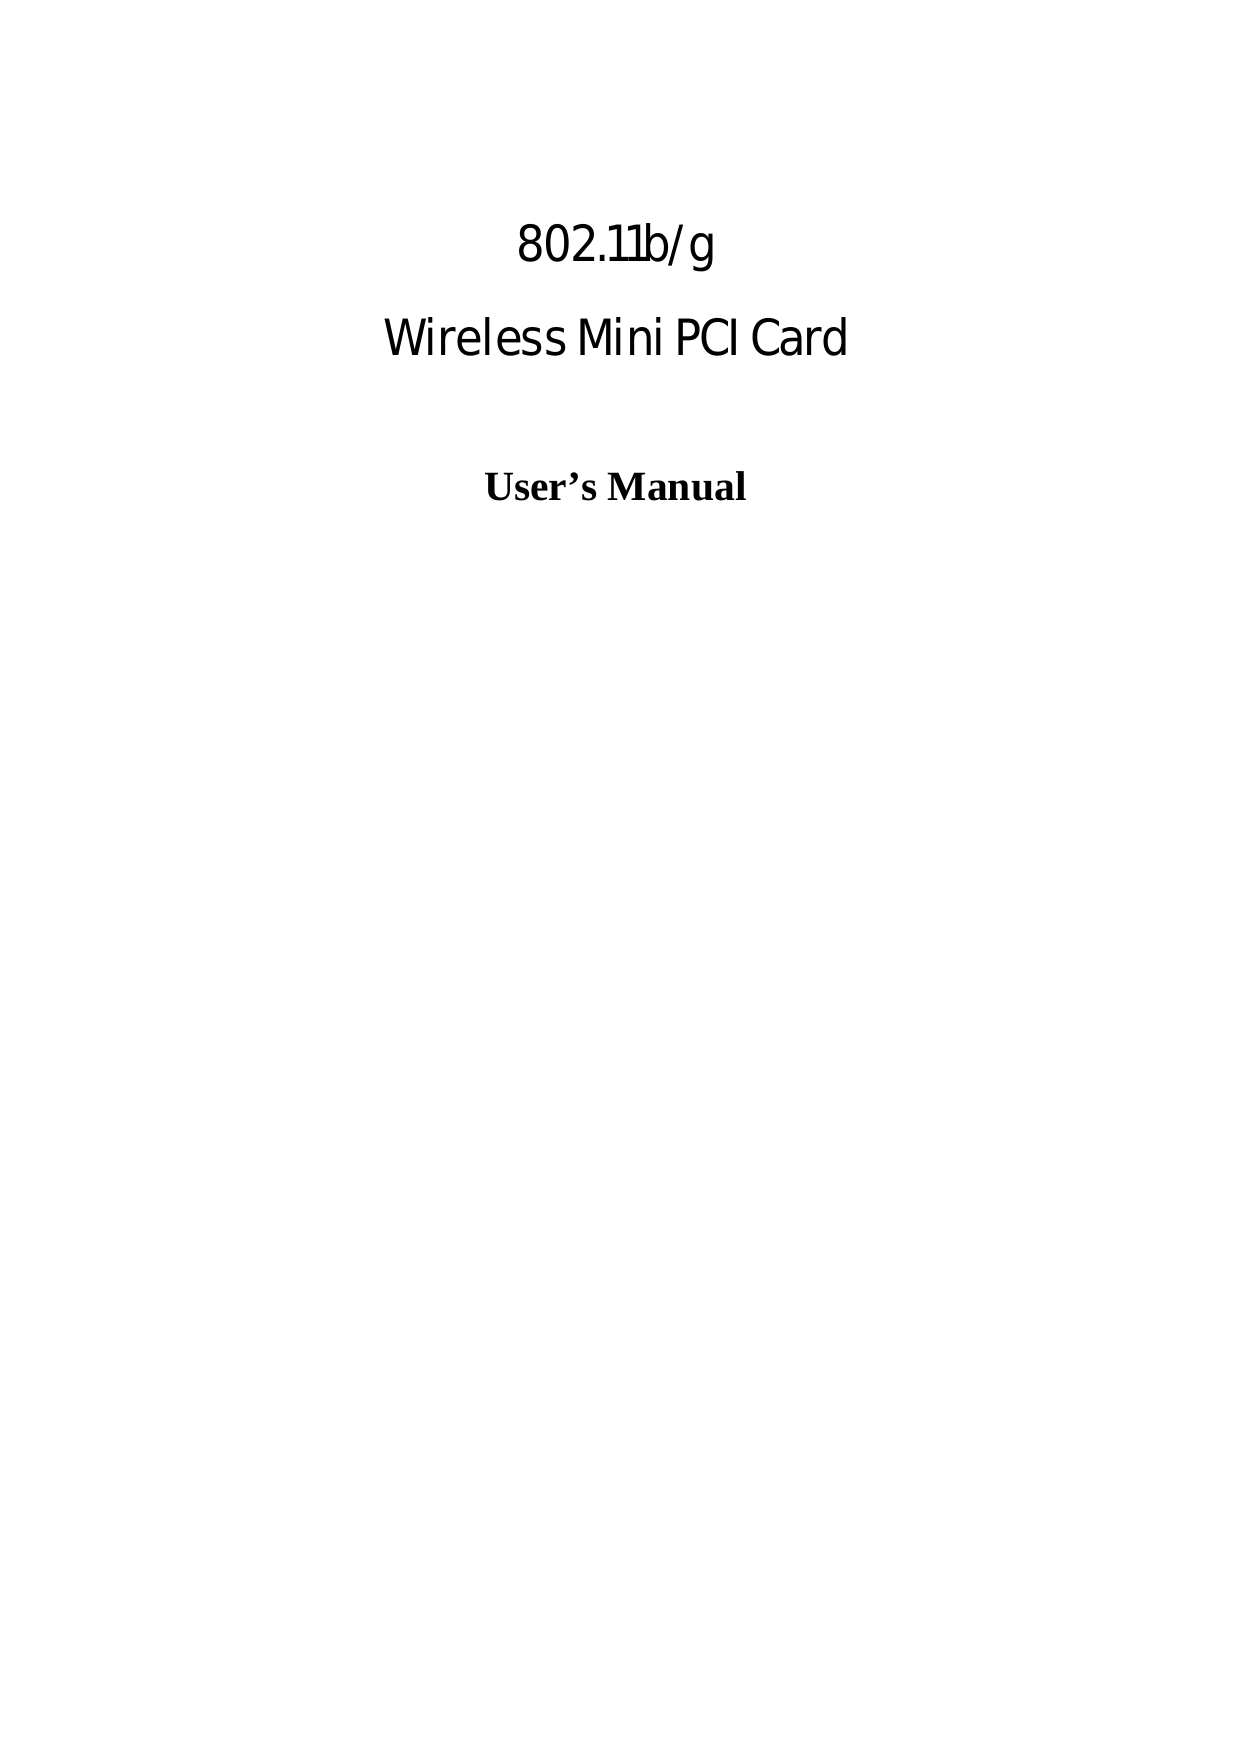     802.11b/g  Wireless Mini PCI Card  User’s Manual       